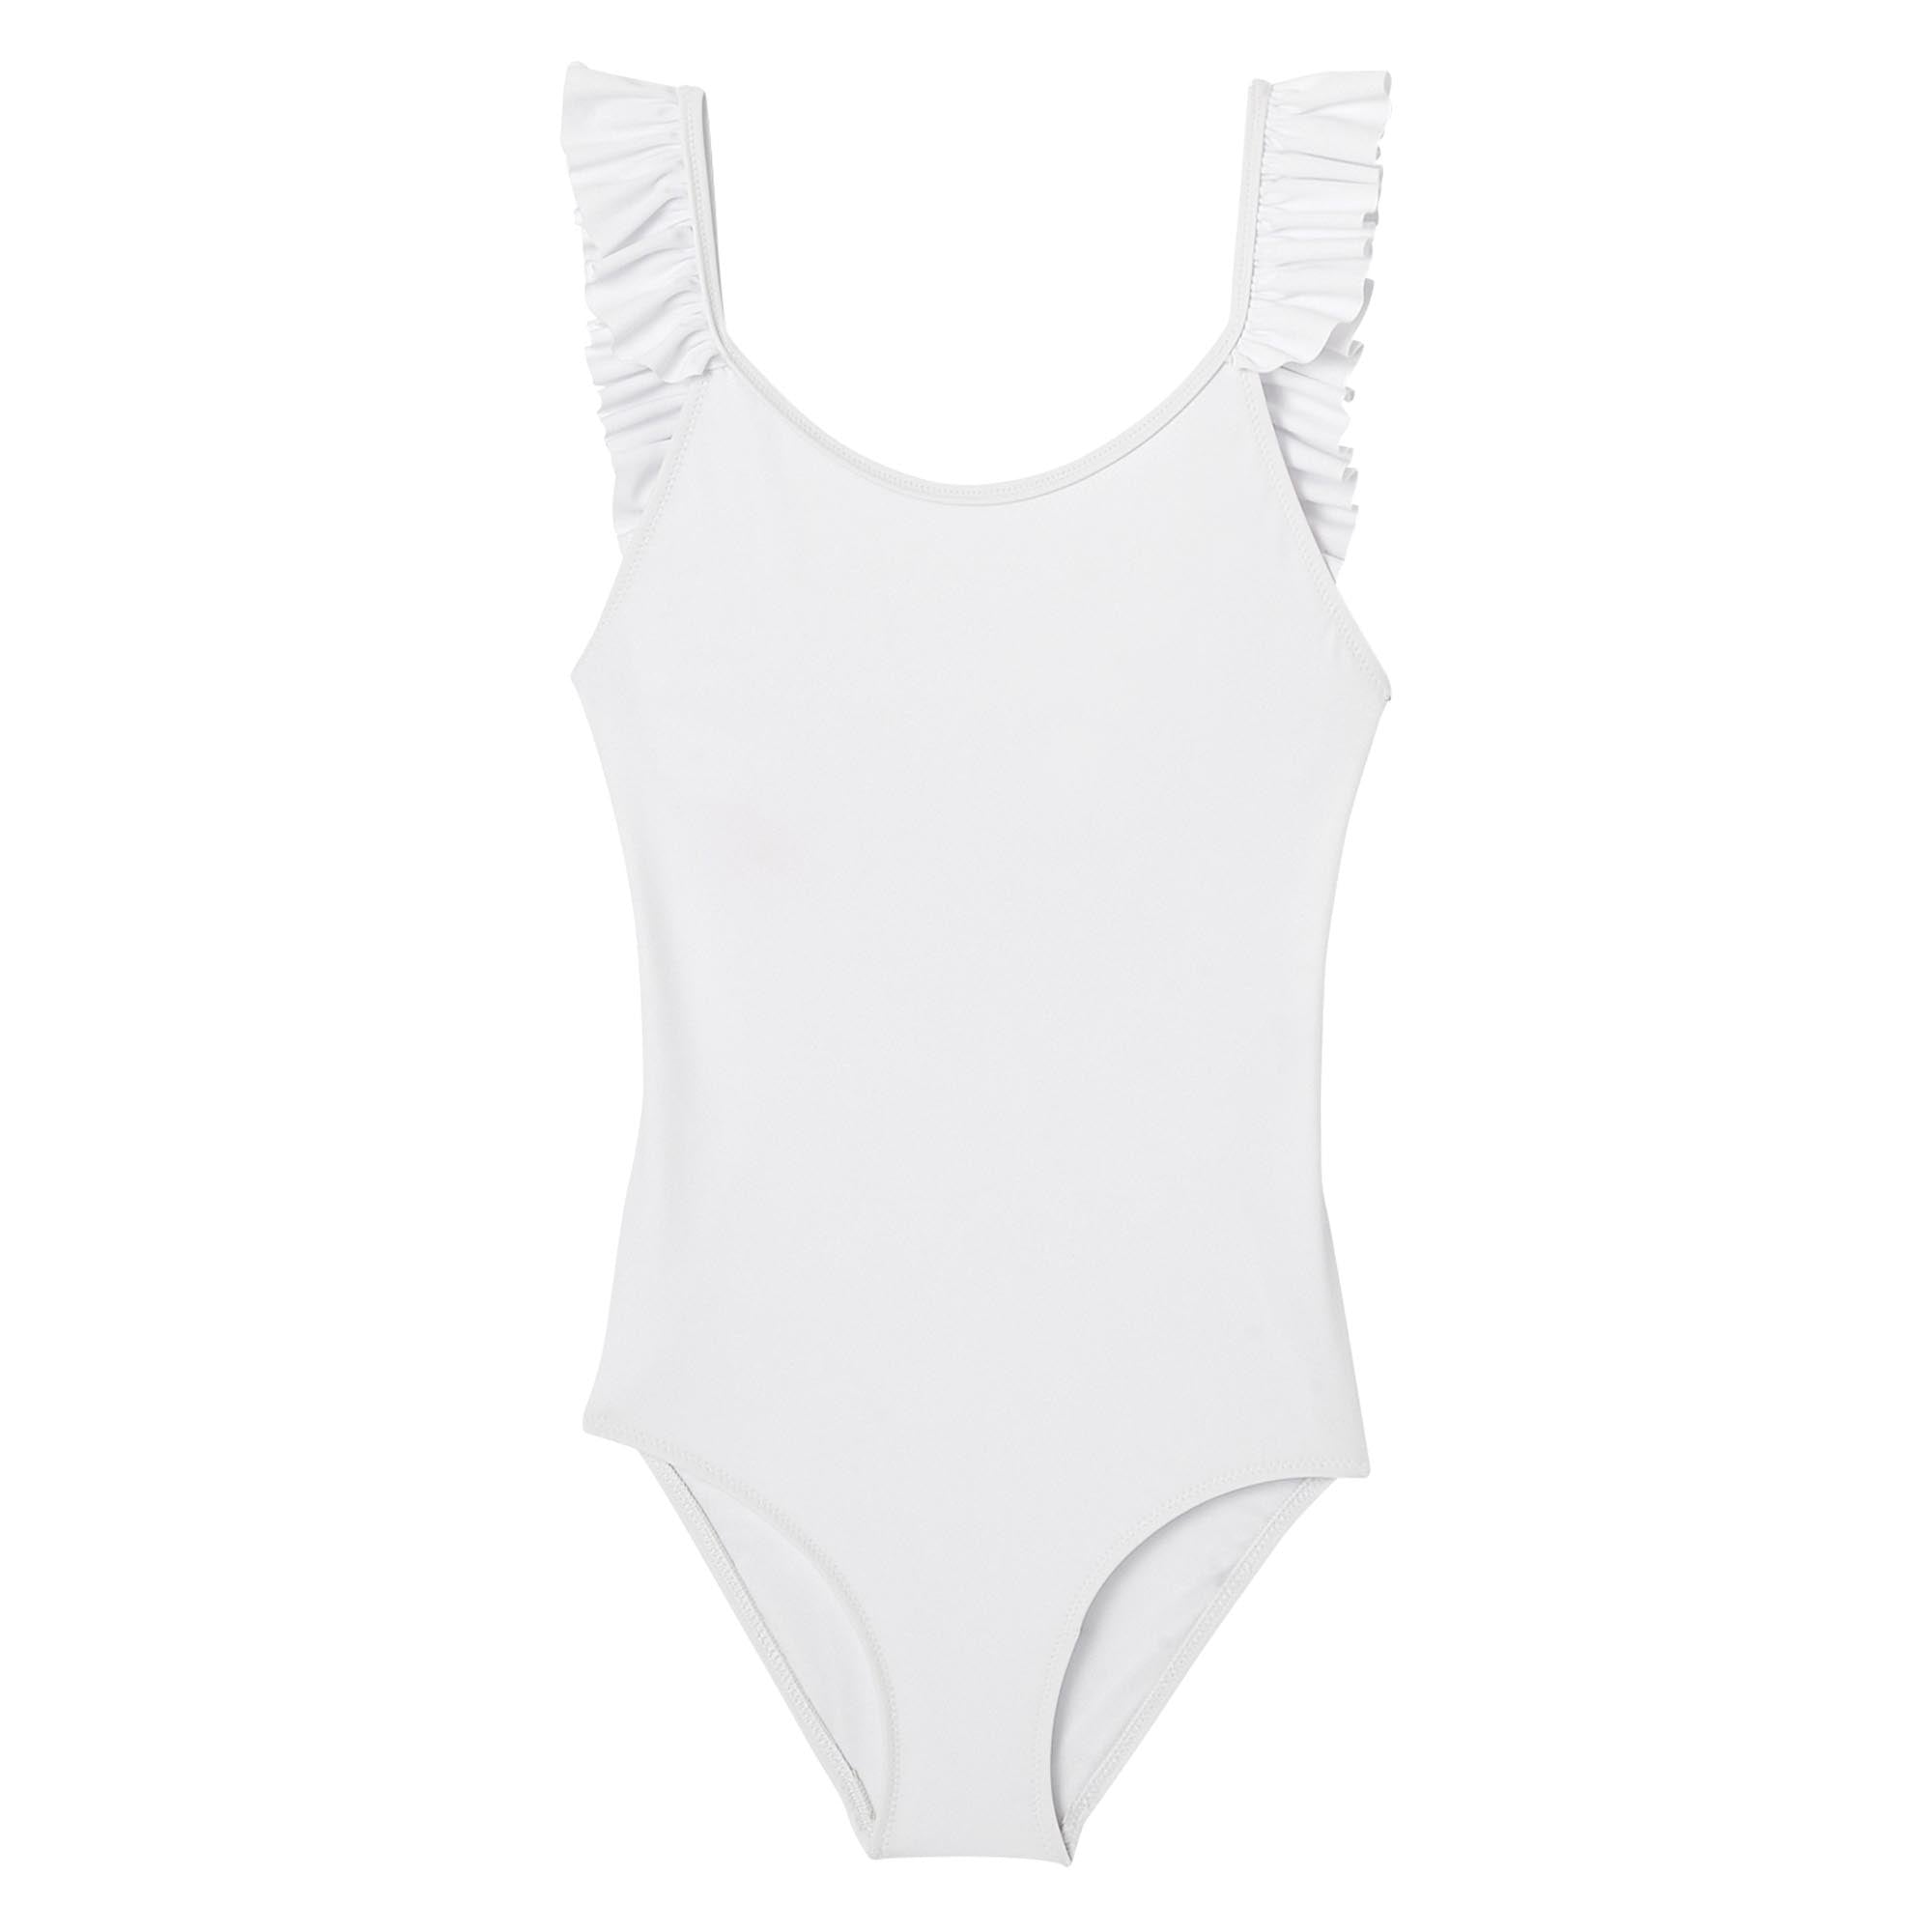 Girl one piece swimsuit, UPF50+, white